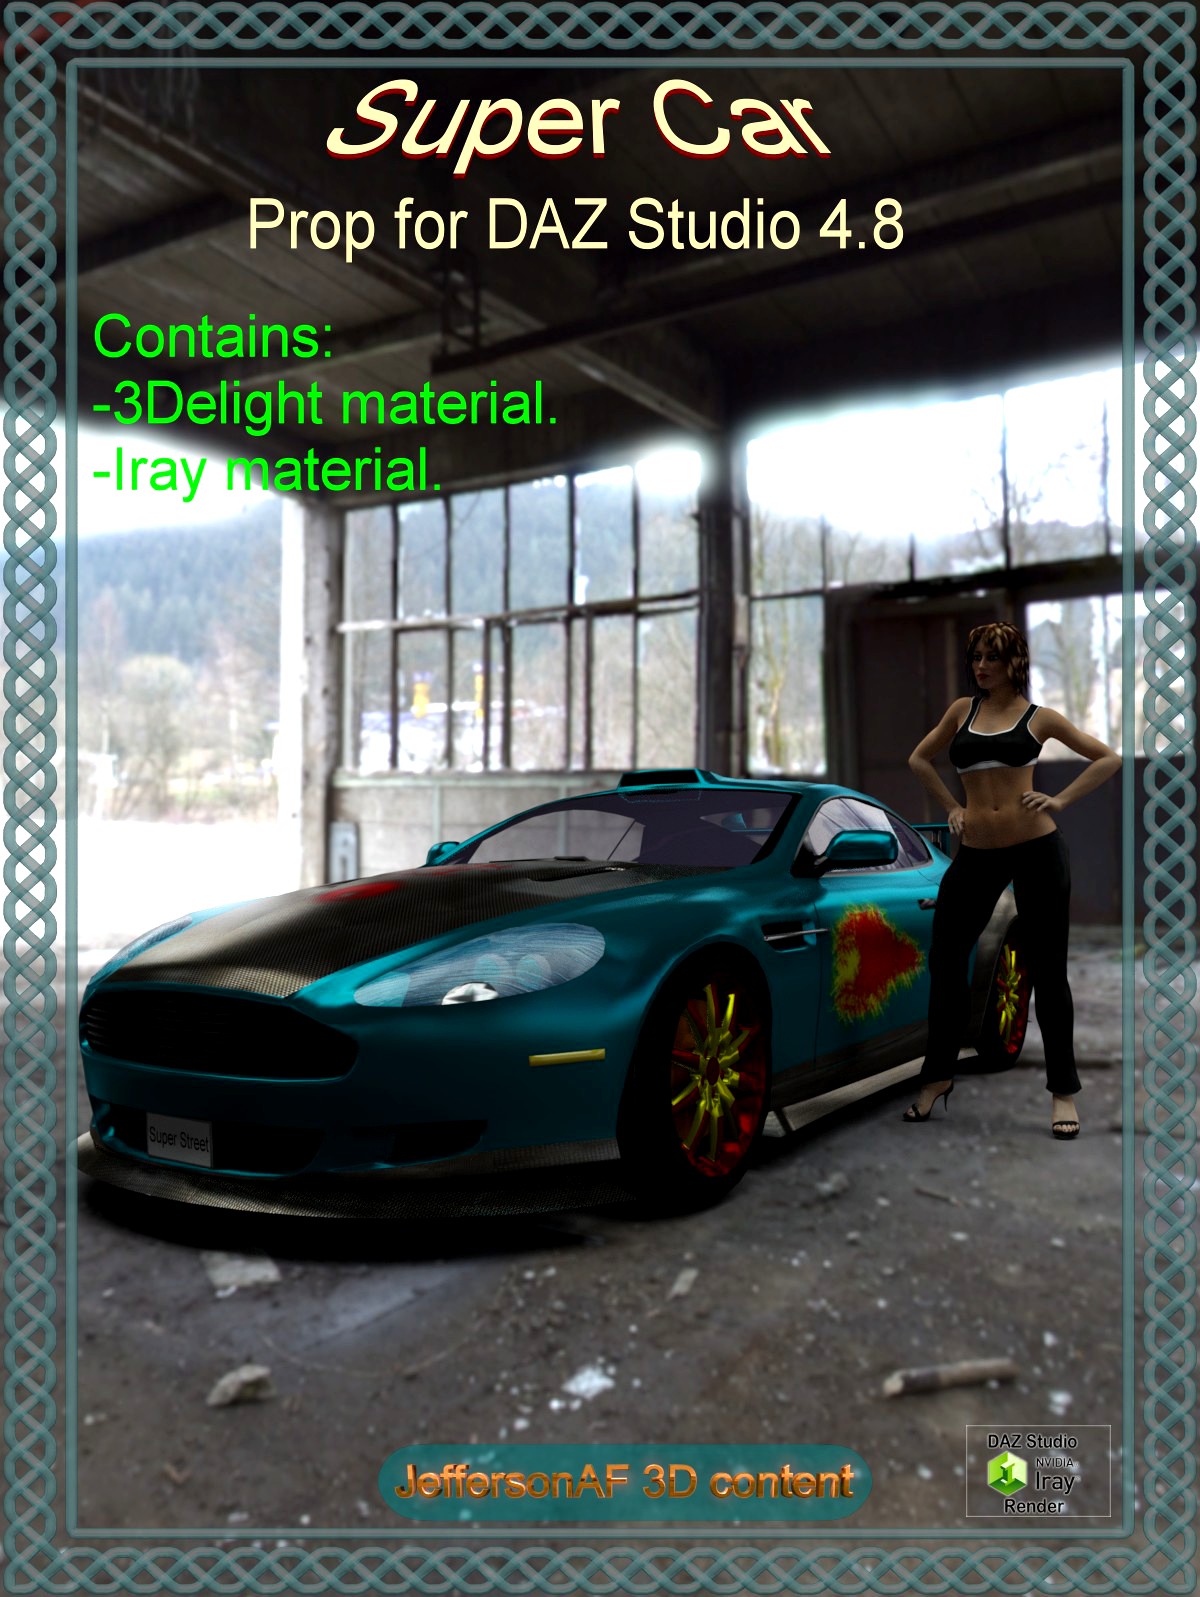 Super Car DAZ Studio